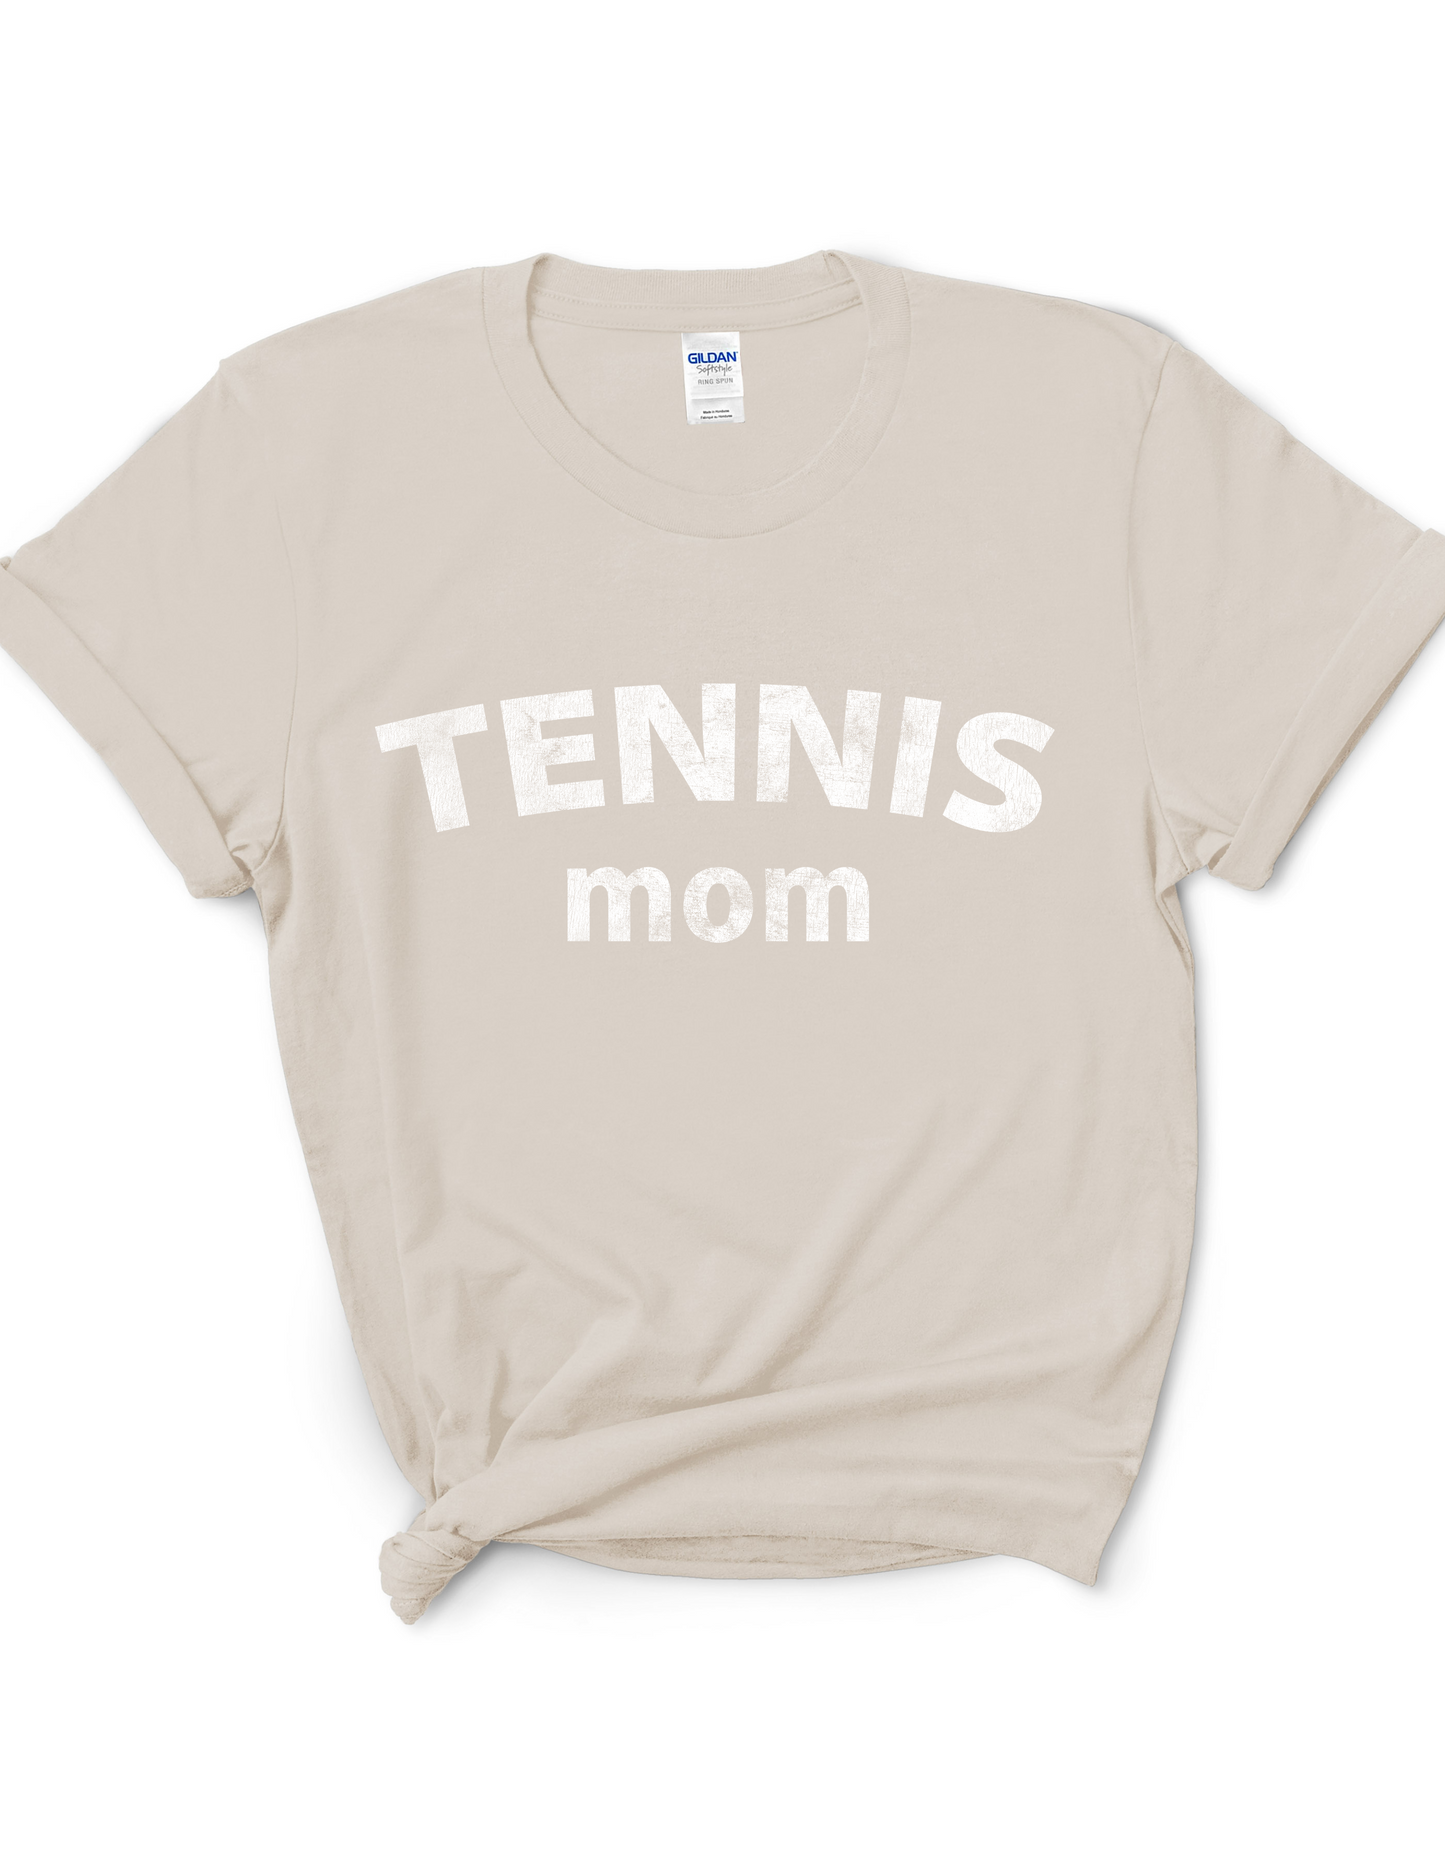 Mom Era - Tennis